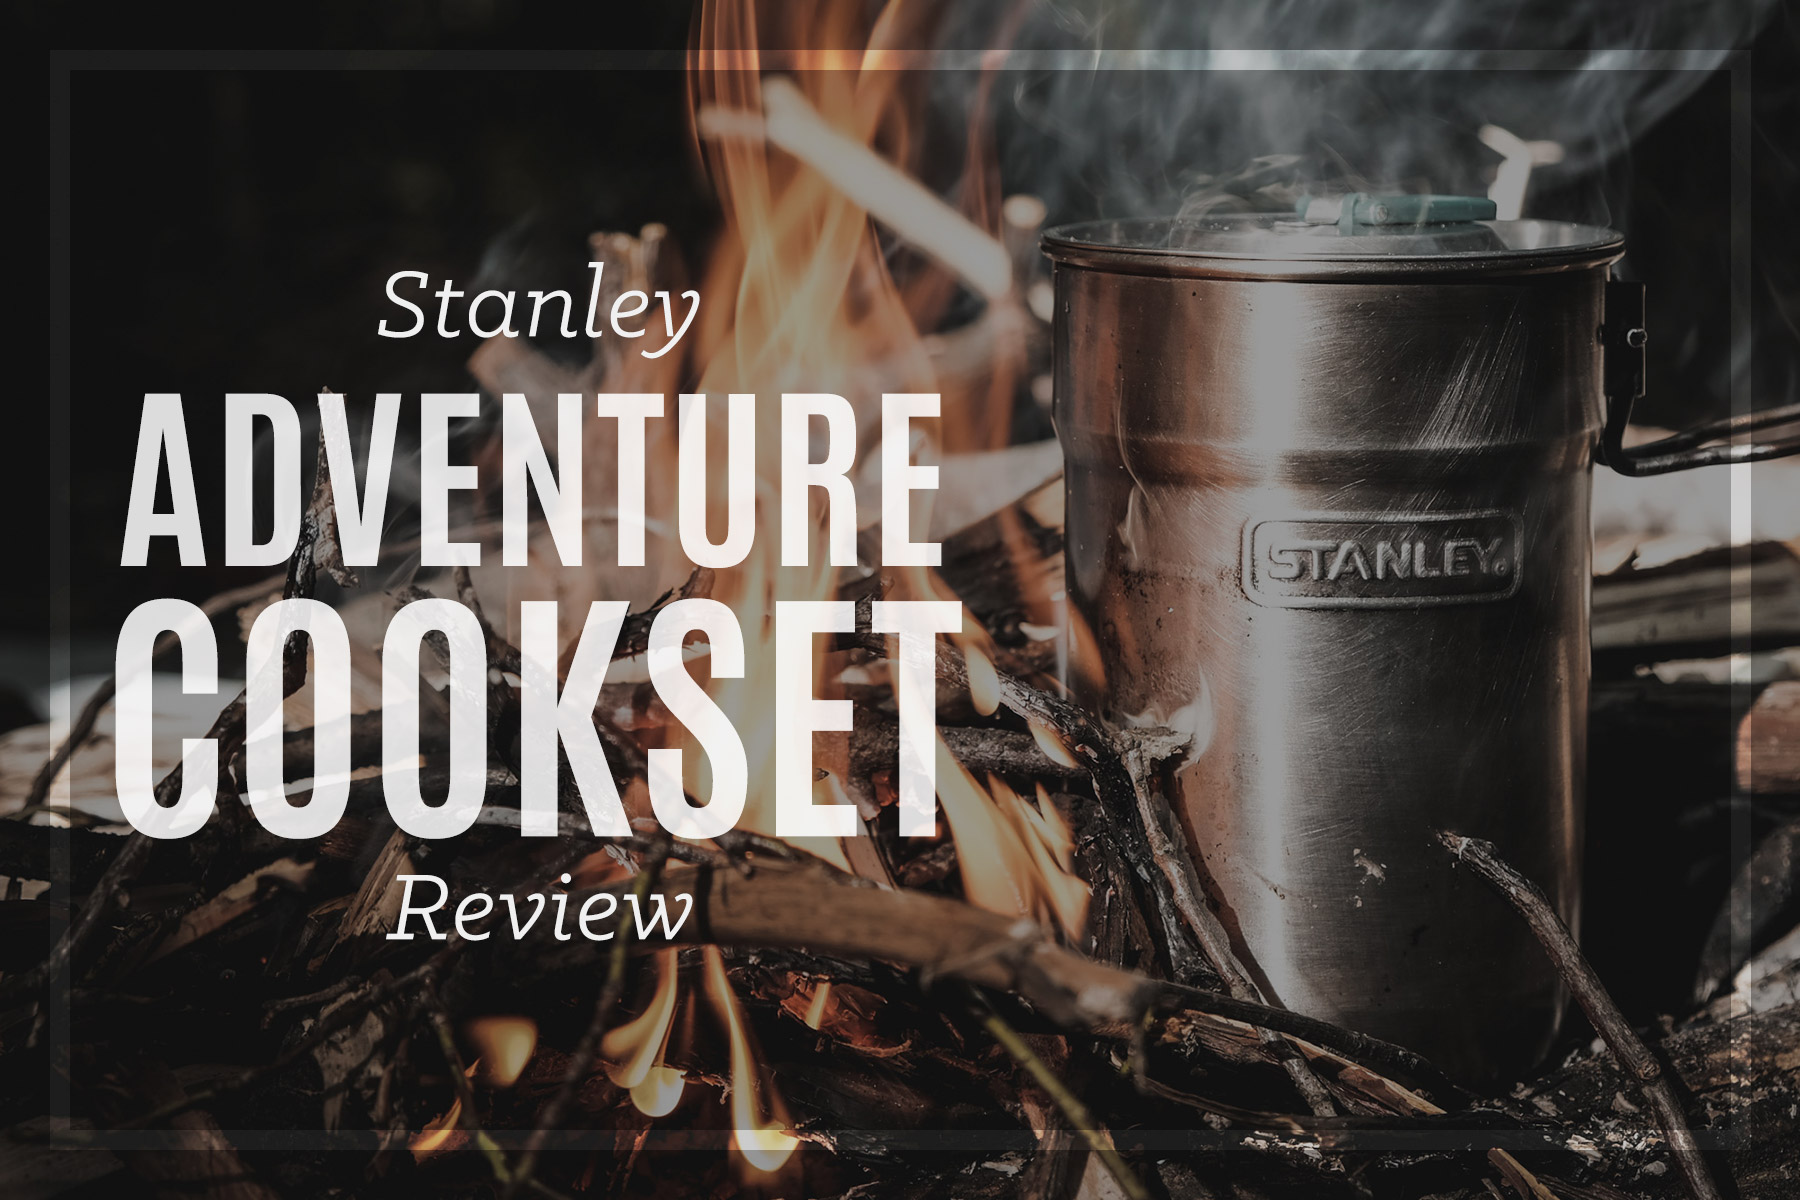 Stanley Adventure Cook Set Review